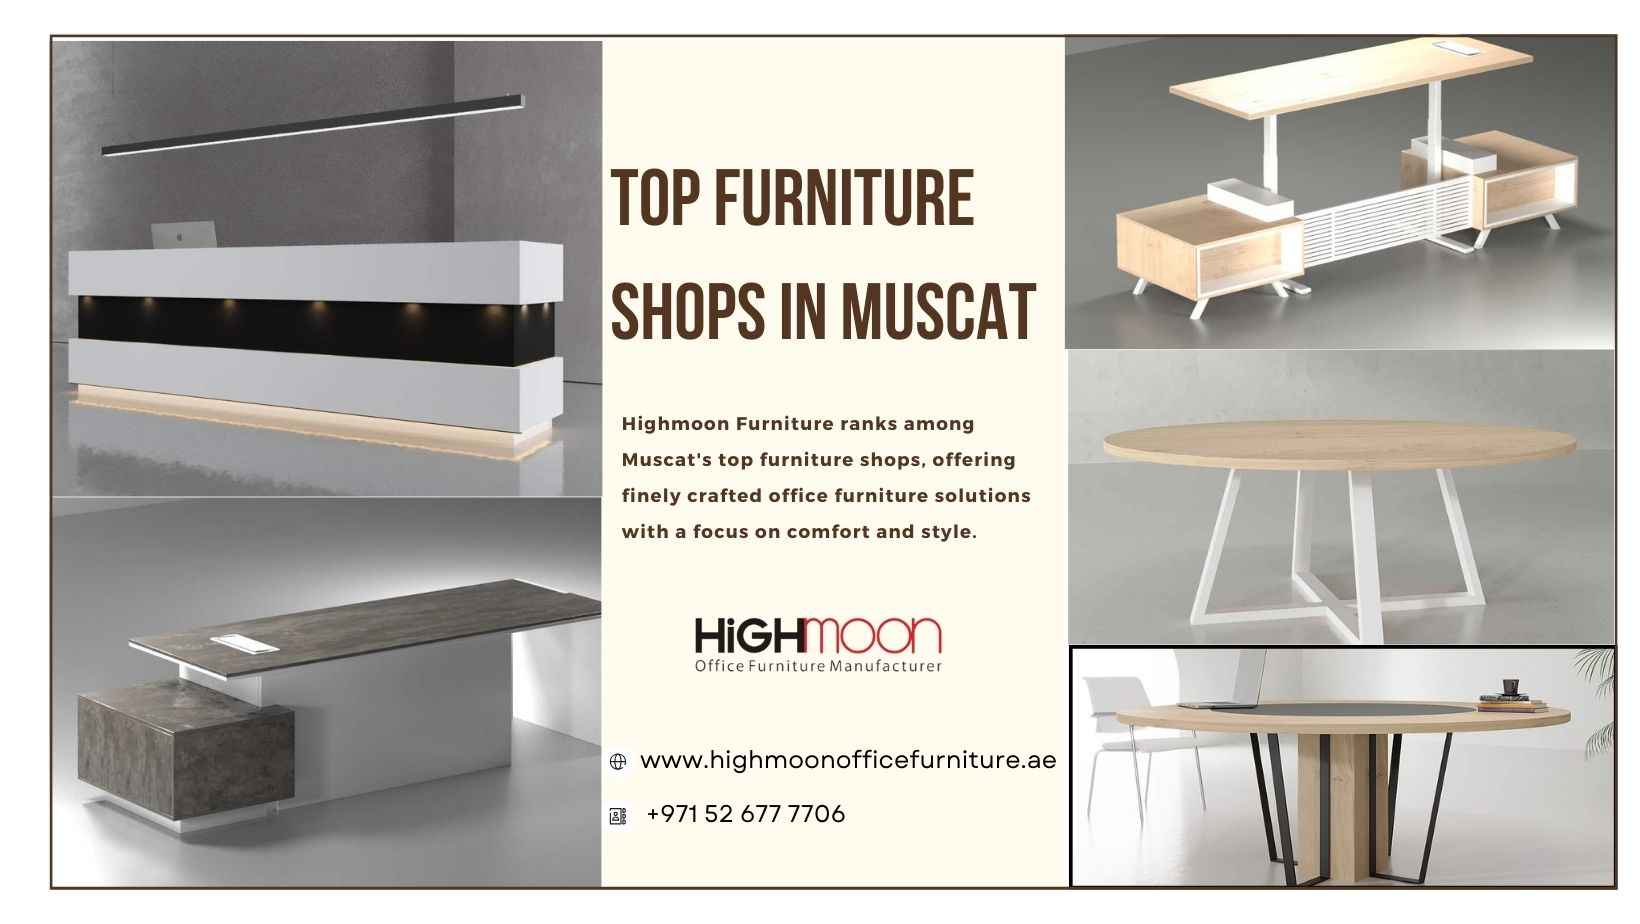 Top Furniture Shops in Muscat